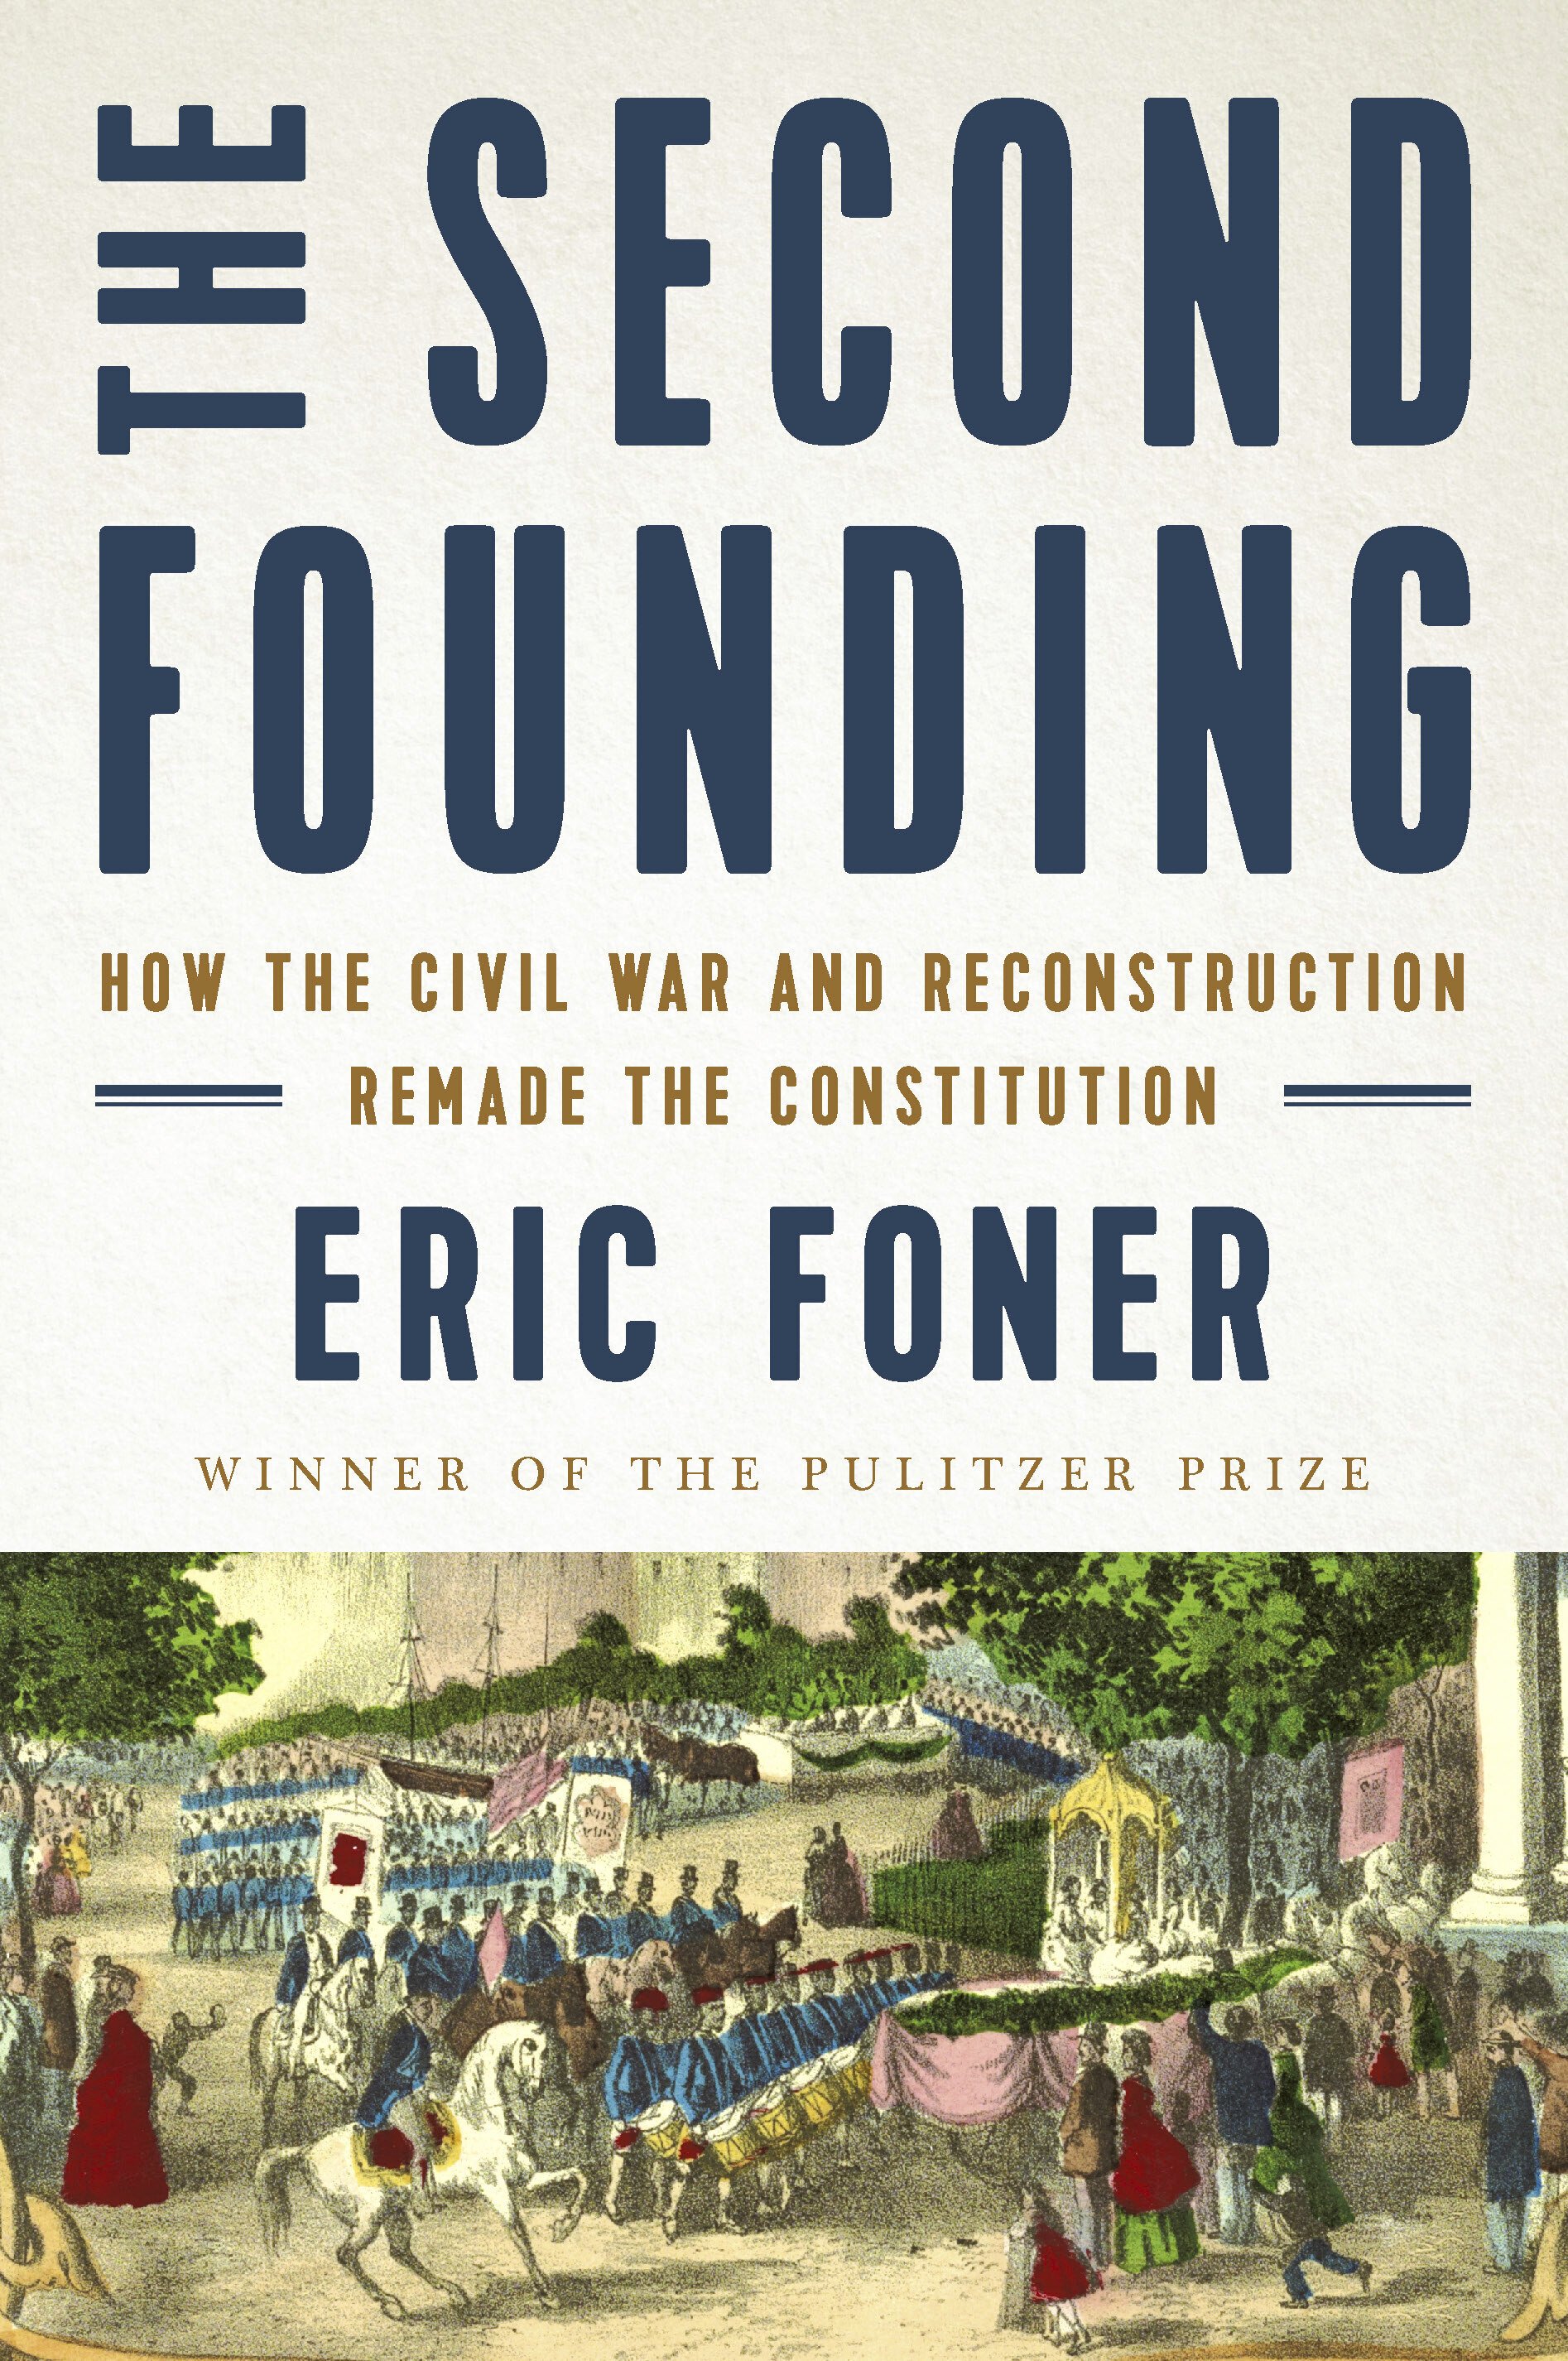 NEW POSTER 13th Amendment Constitution Reconstruction US Civil War History 